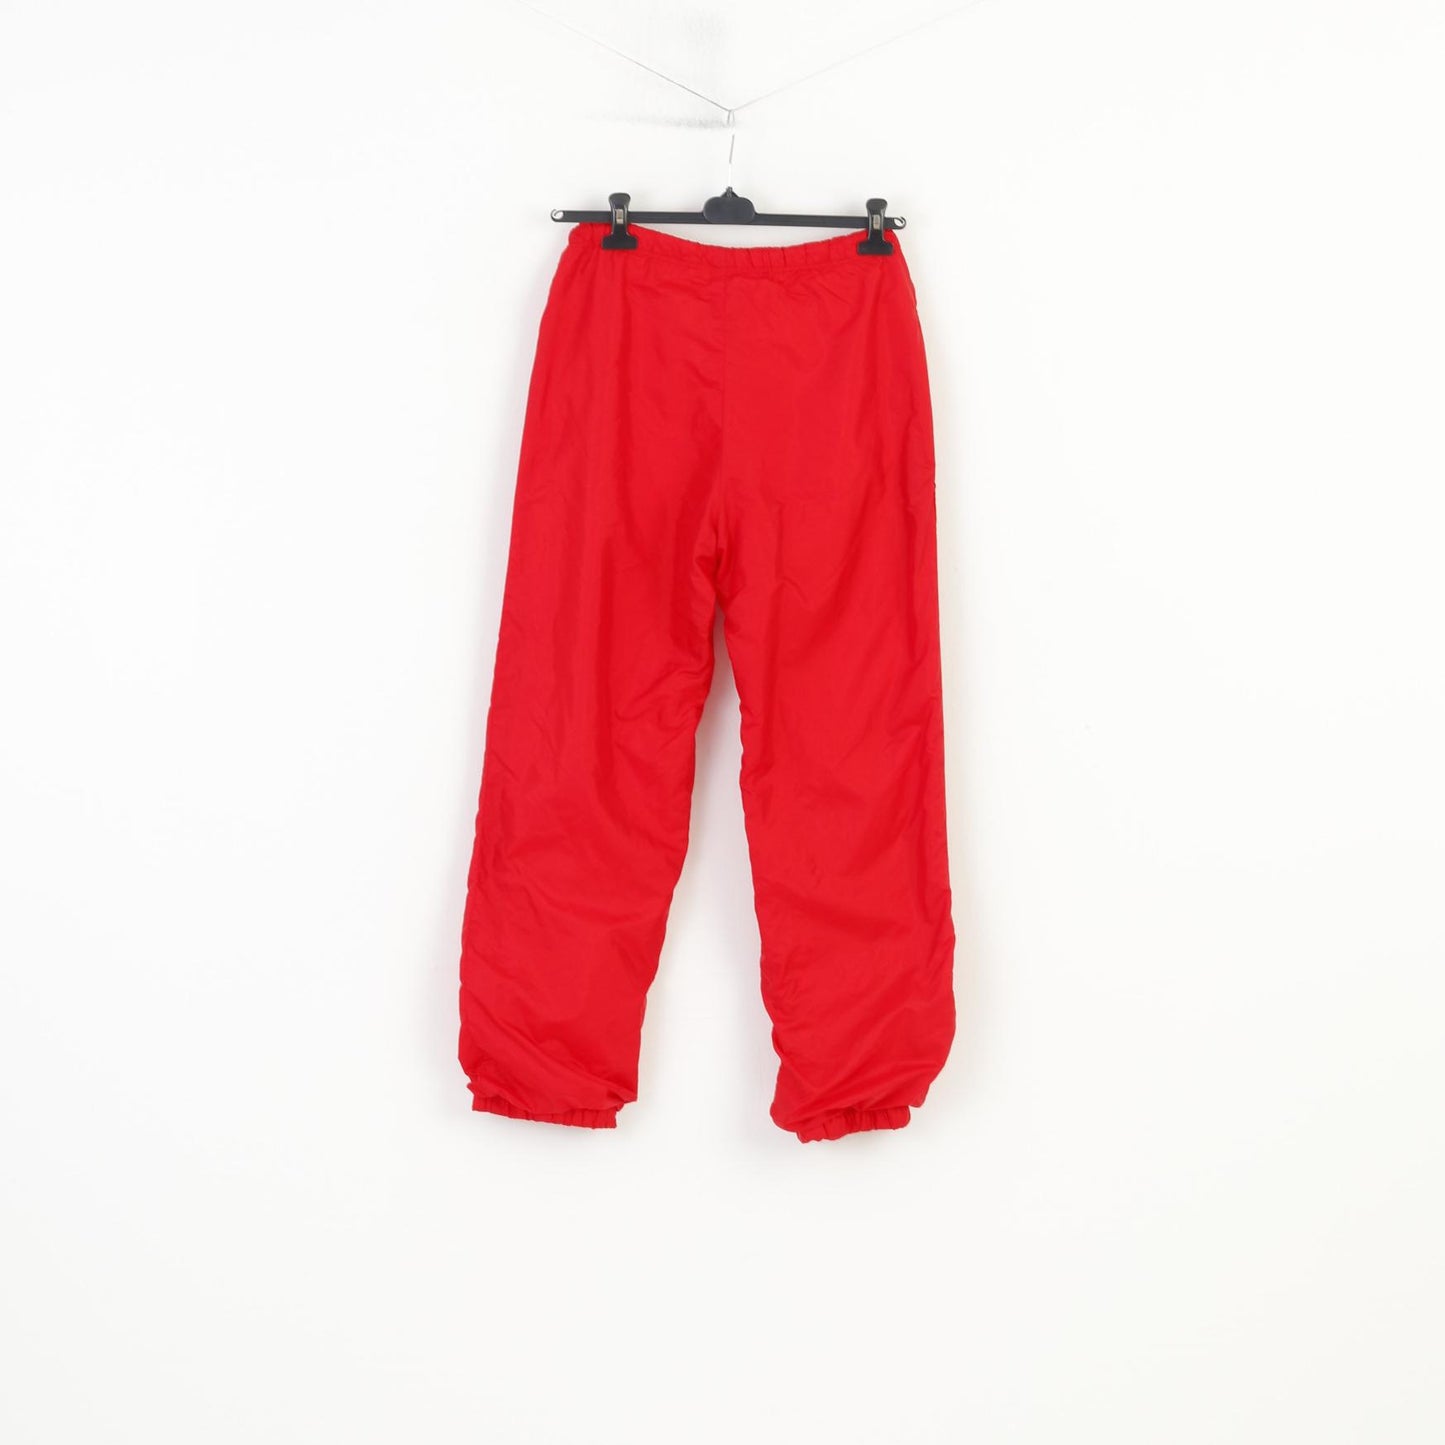 Sergio Tacchini Women 12 M Trousers Red Vintage 90s Sportswear Nylon Training Pants